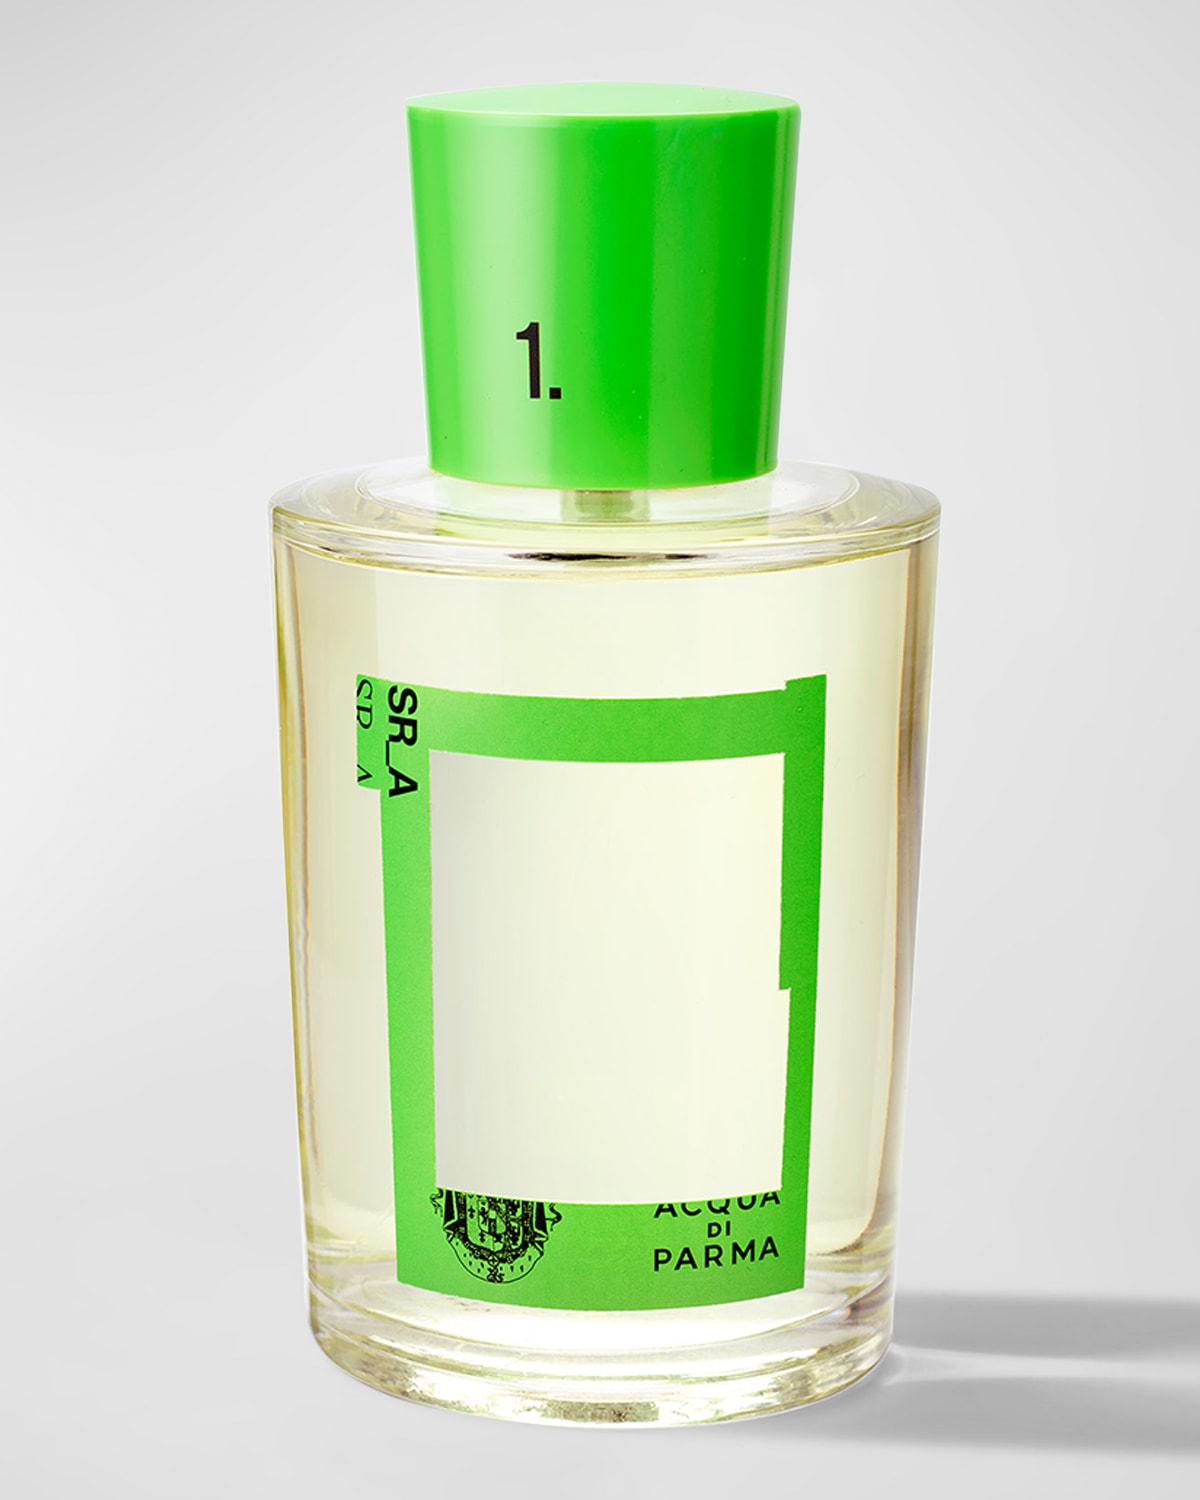 x Samuel Ross Colonia Eau de Cologne, 3.4 oz. - Green